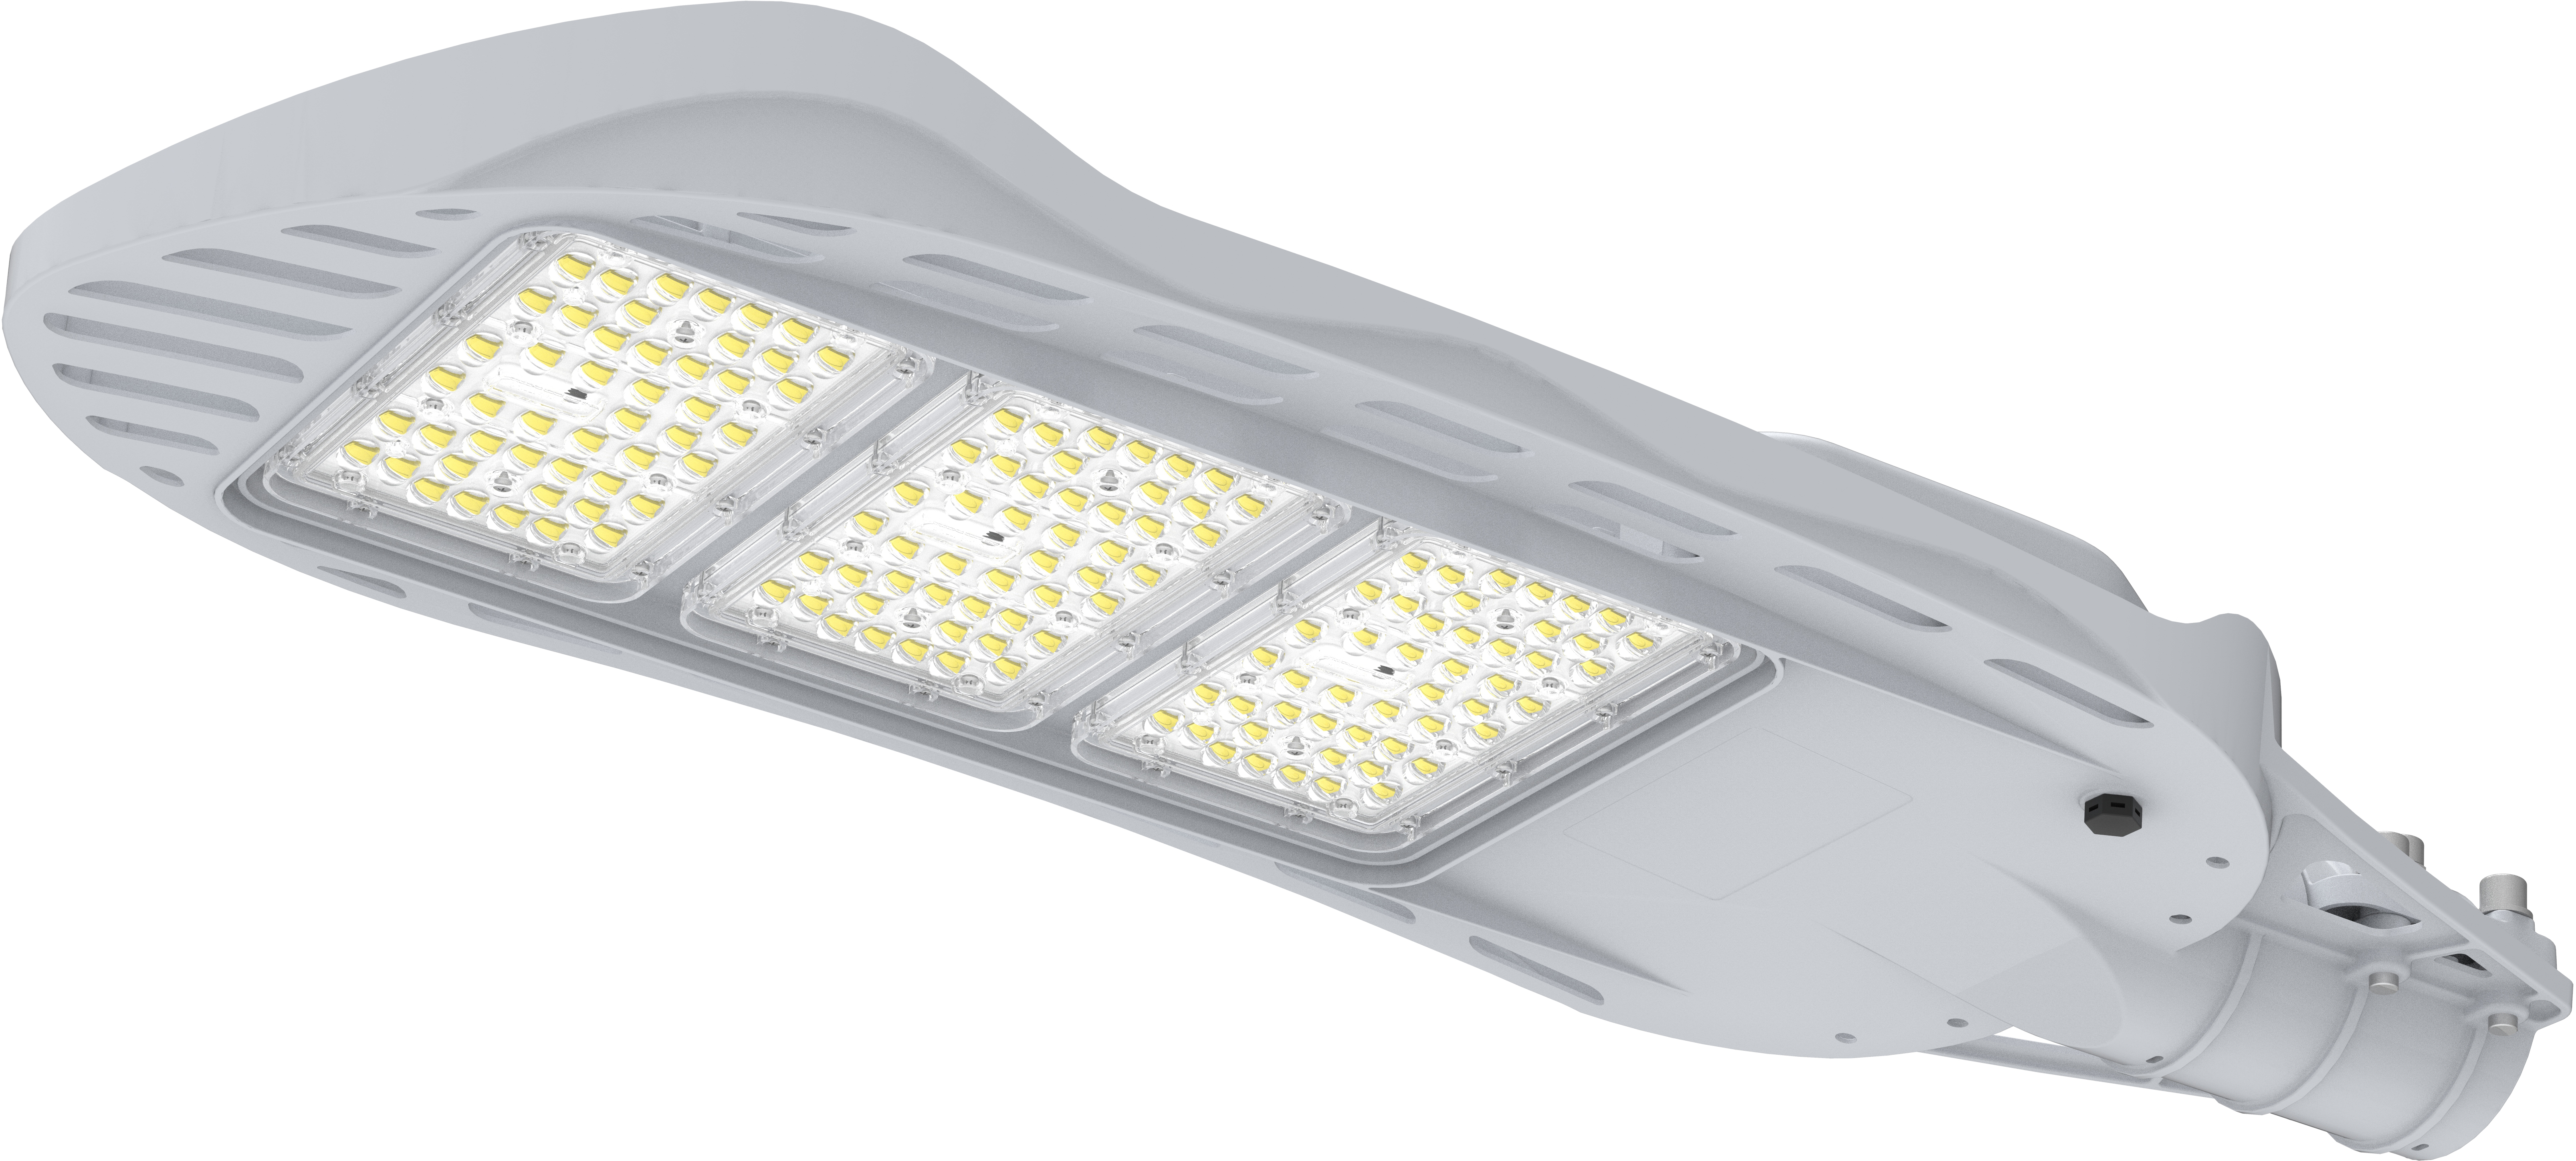 Serie di lampioni stradali a LED-RM 